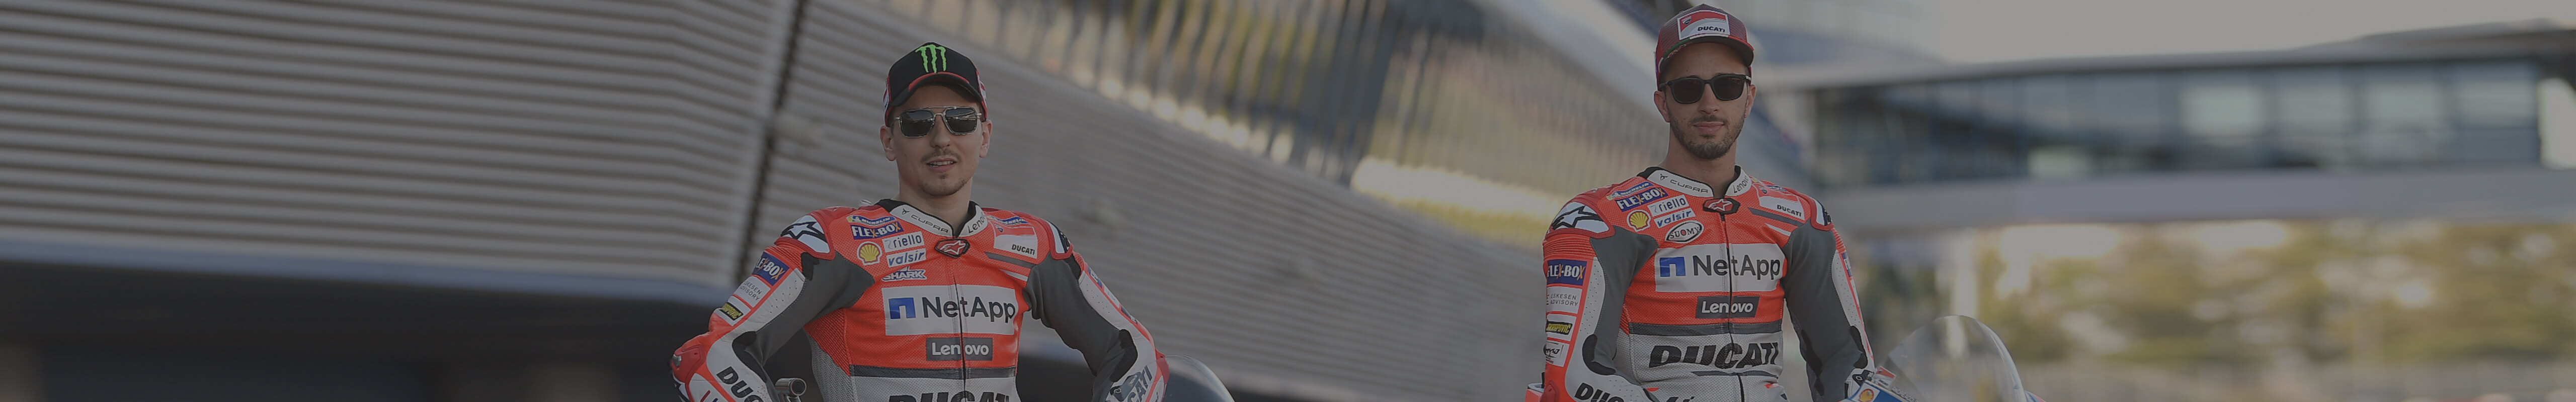 CUPRA nuovo sponsor di Ducati nel MotoGP